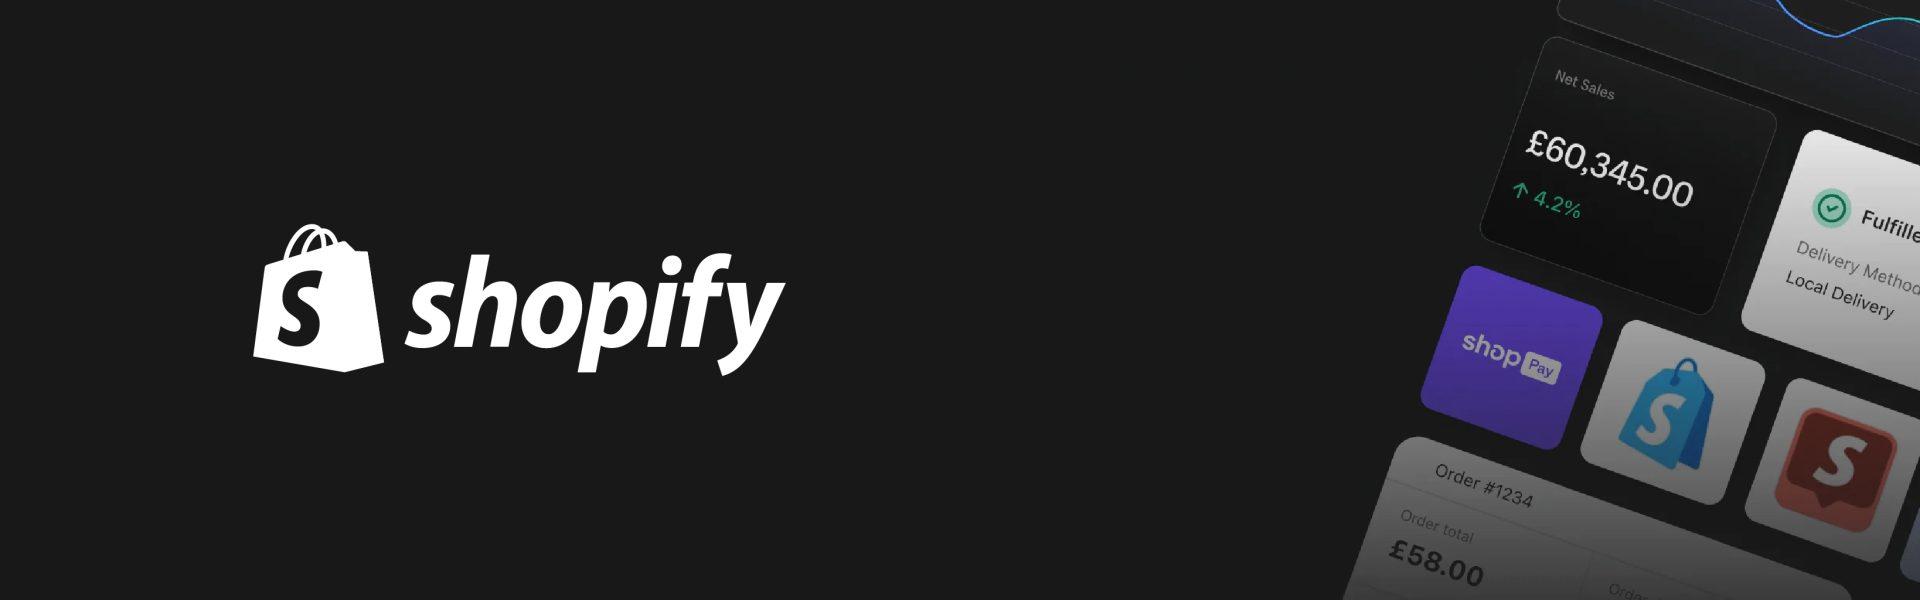 Banner image of shopify logo